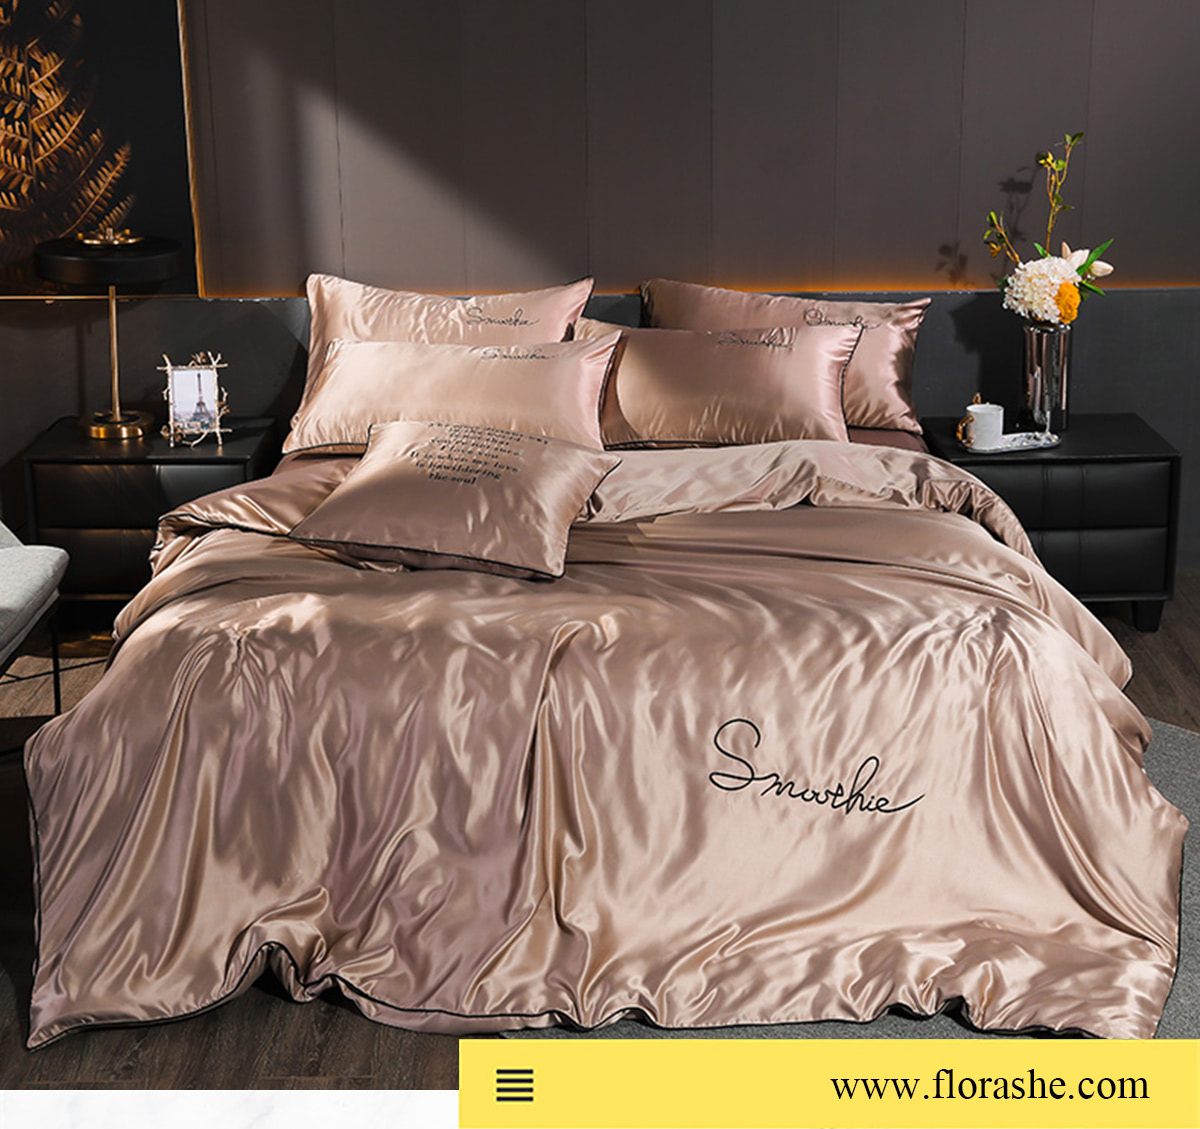 Silky-Satin-Duvet-Cover-Flat-Sheet-Pillowcase-Bedding-4Pcs-Set11